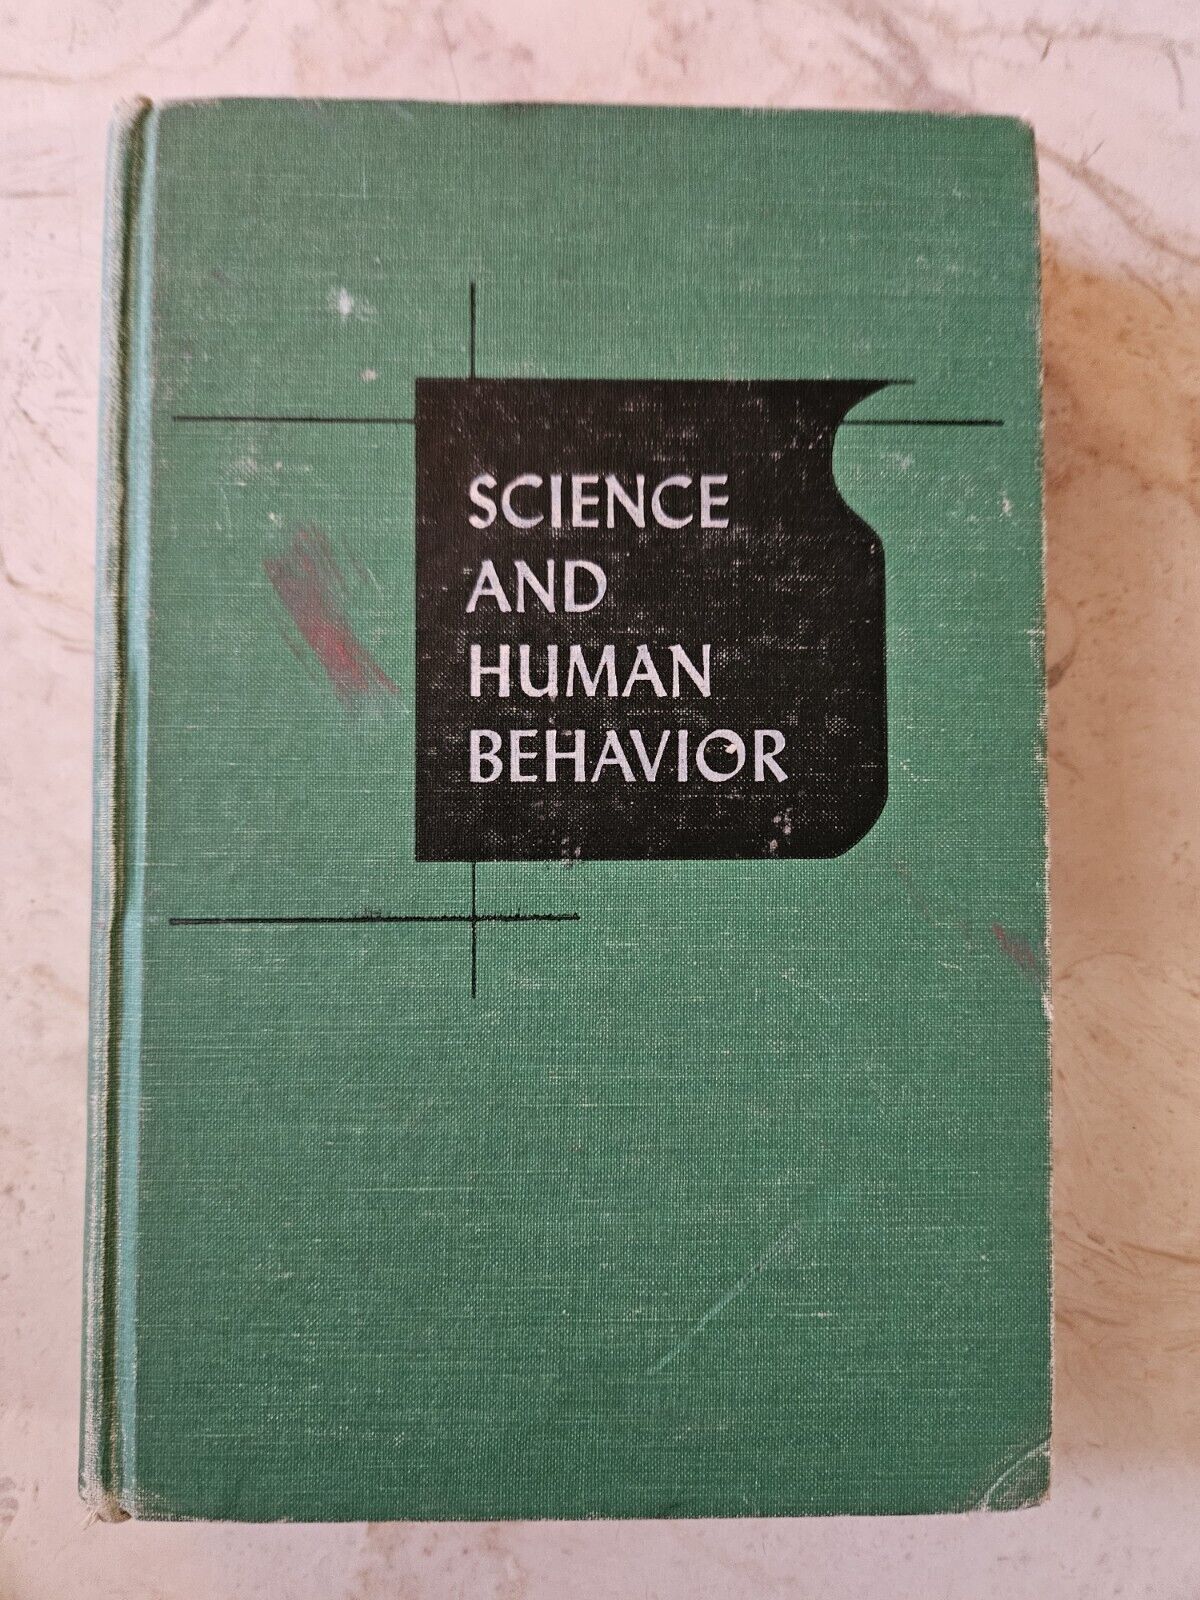 Vintage 1953 Science and Human Behavior by B. F. Skinner